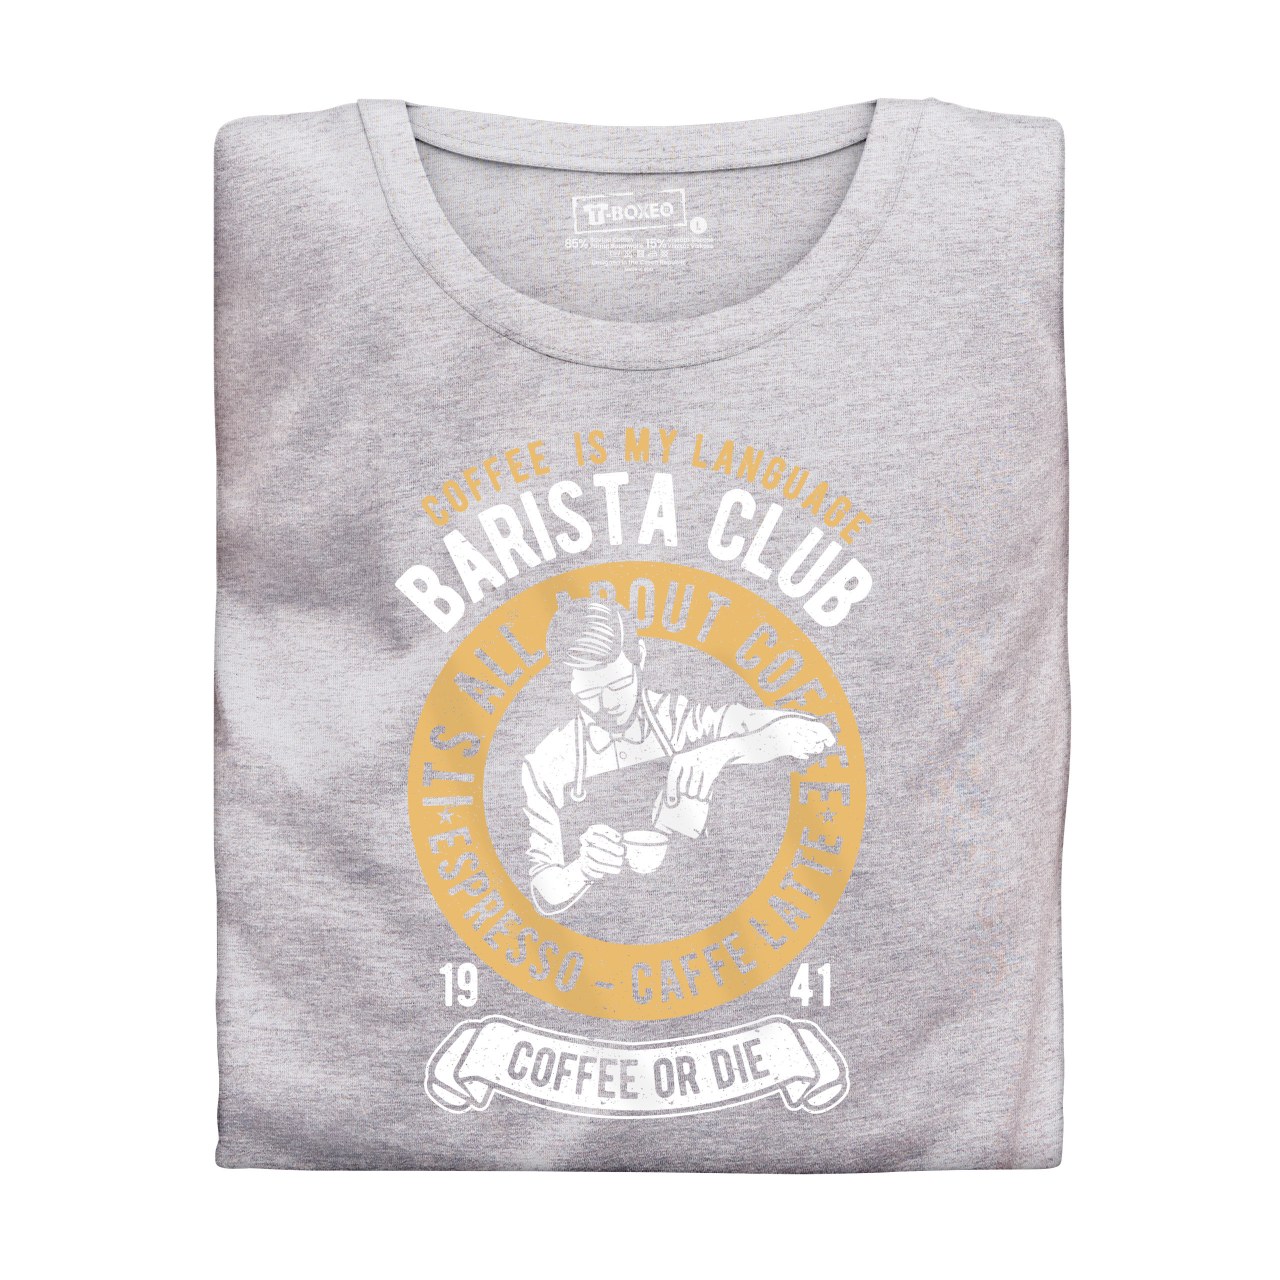 Pánské tričko s potiskem “Barista Club”